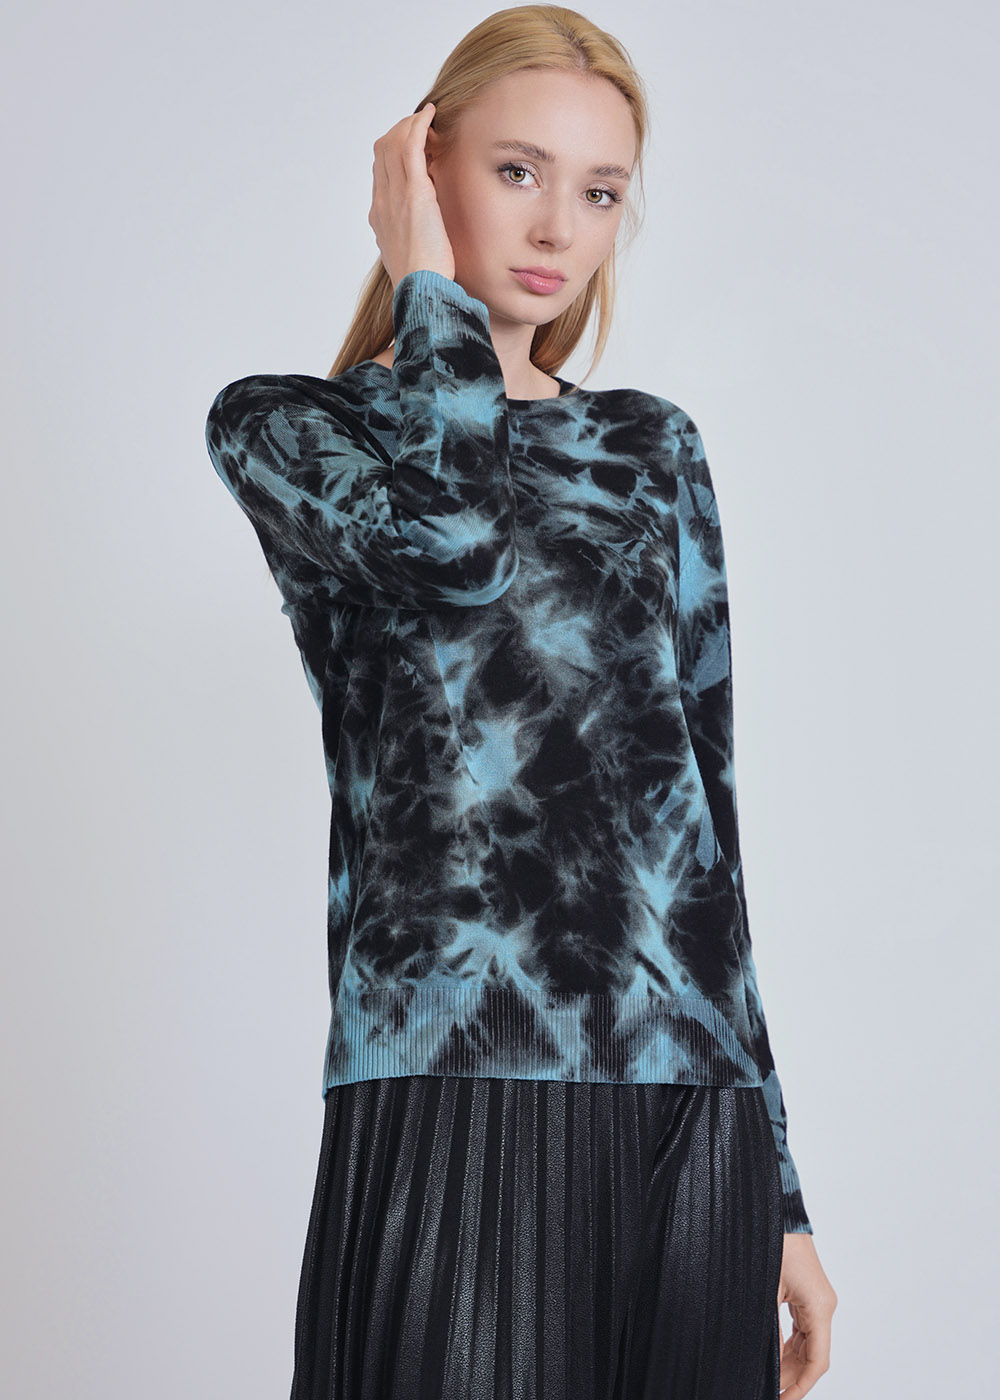 Black & Blue Tie Dye Fusion Sweater